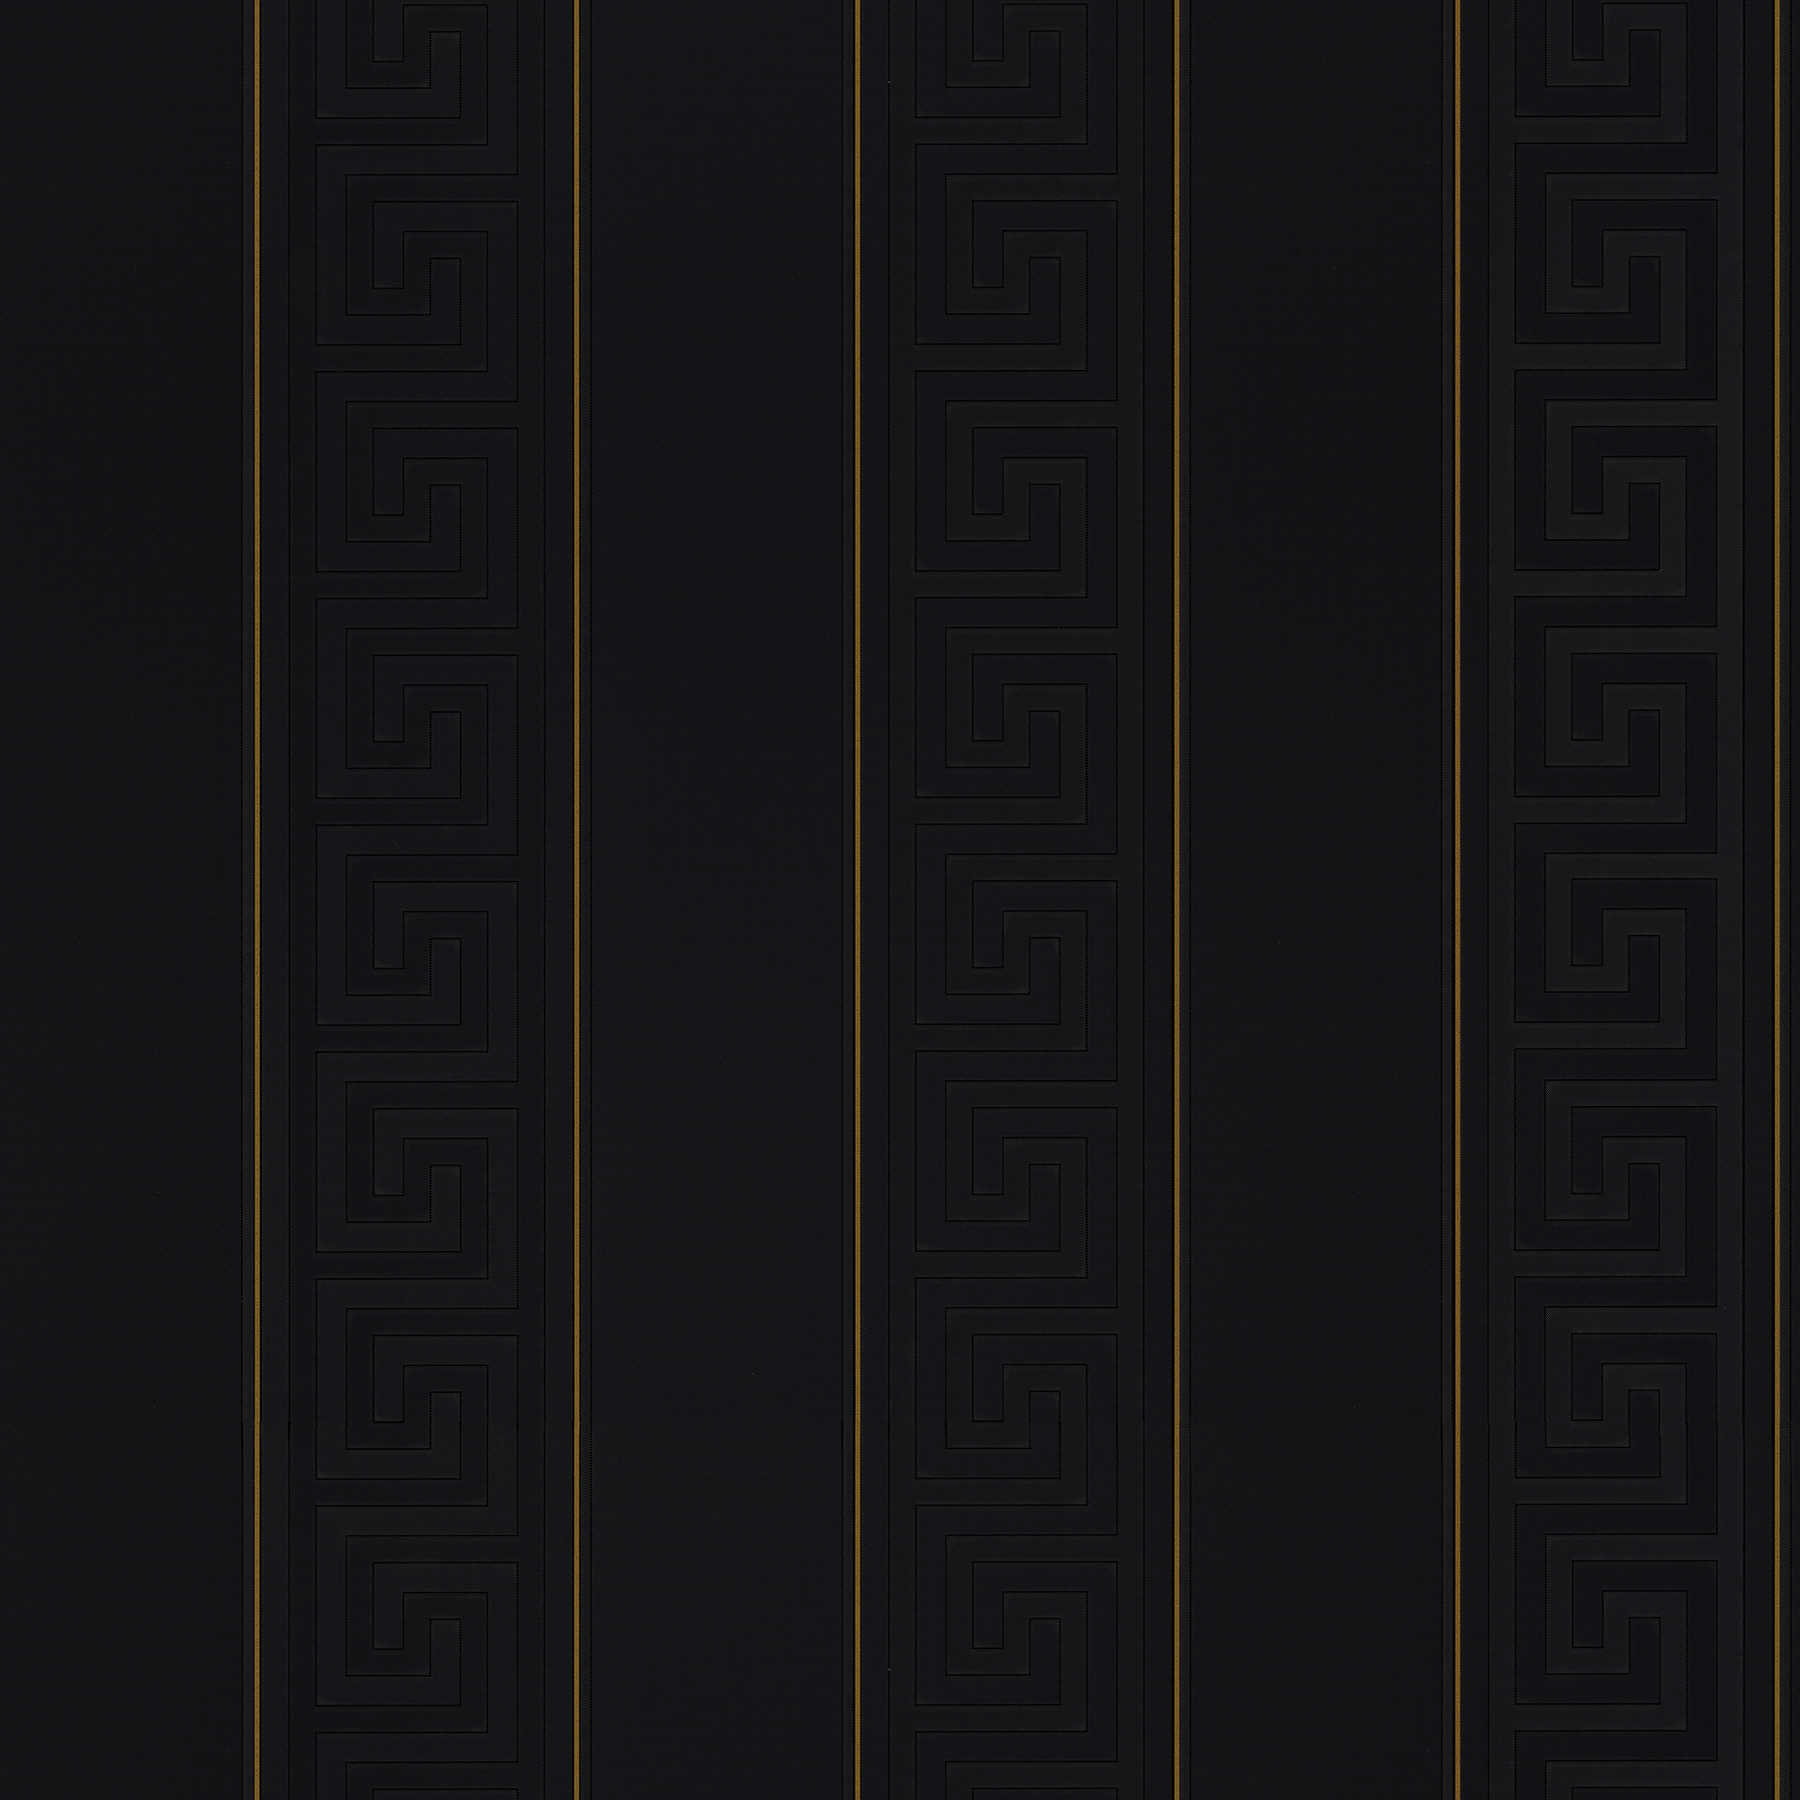 VERSACE wallpaper black with stripes pattern - black, gold
